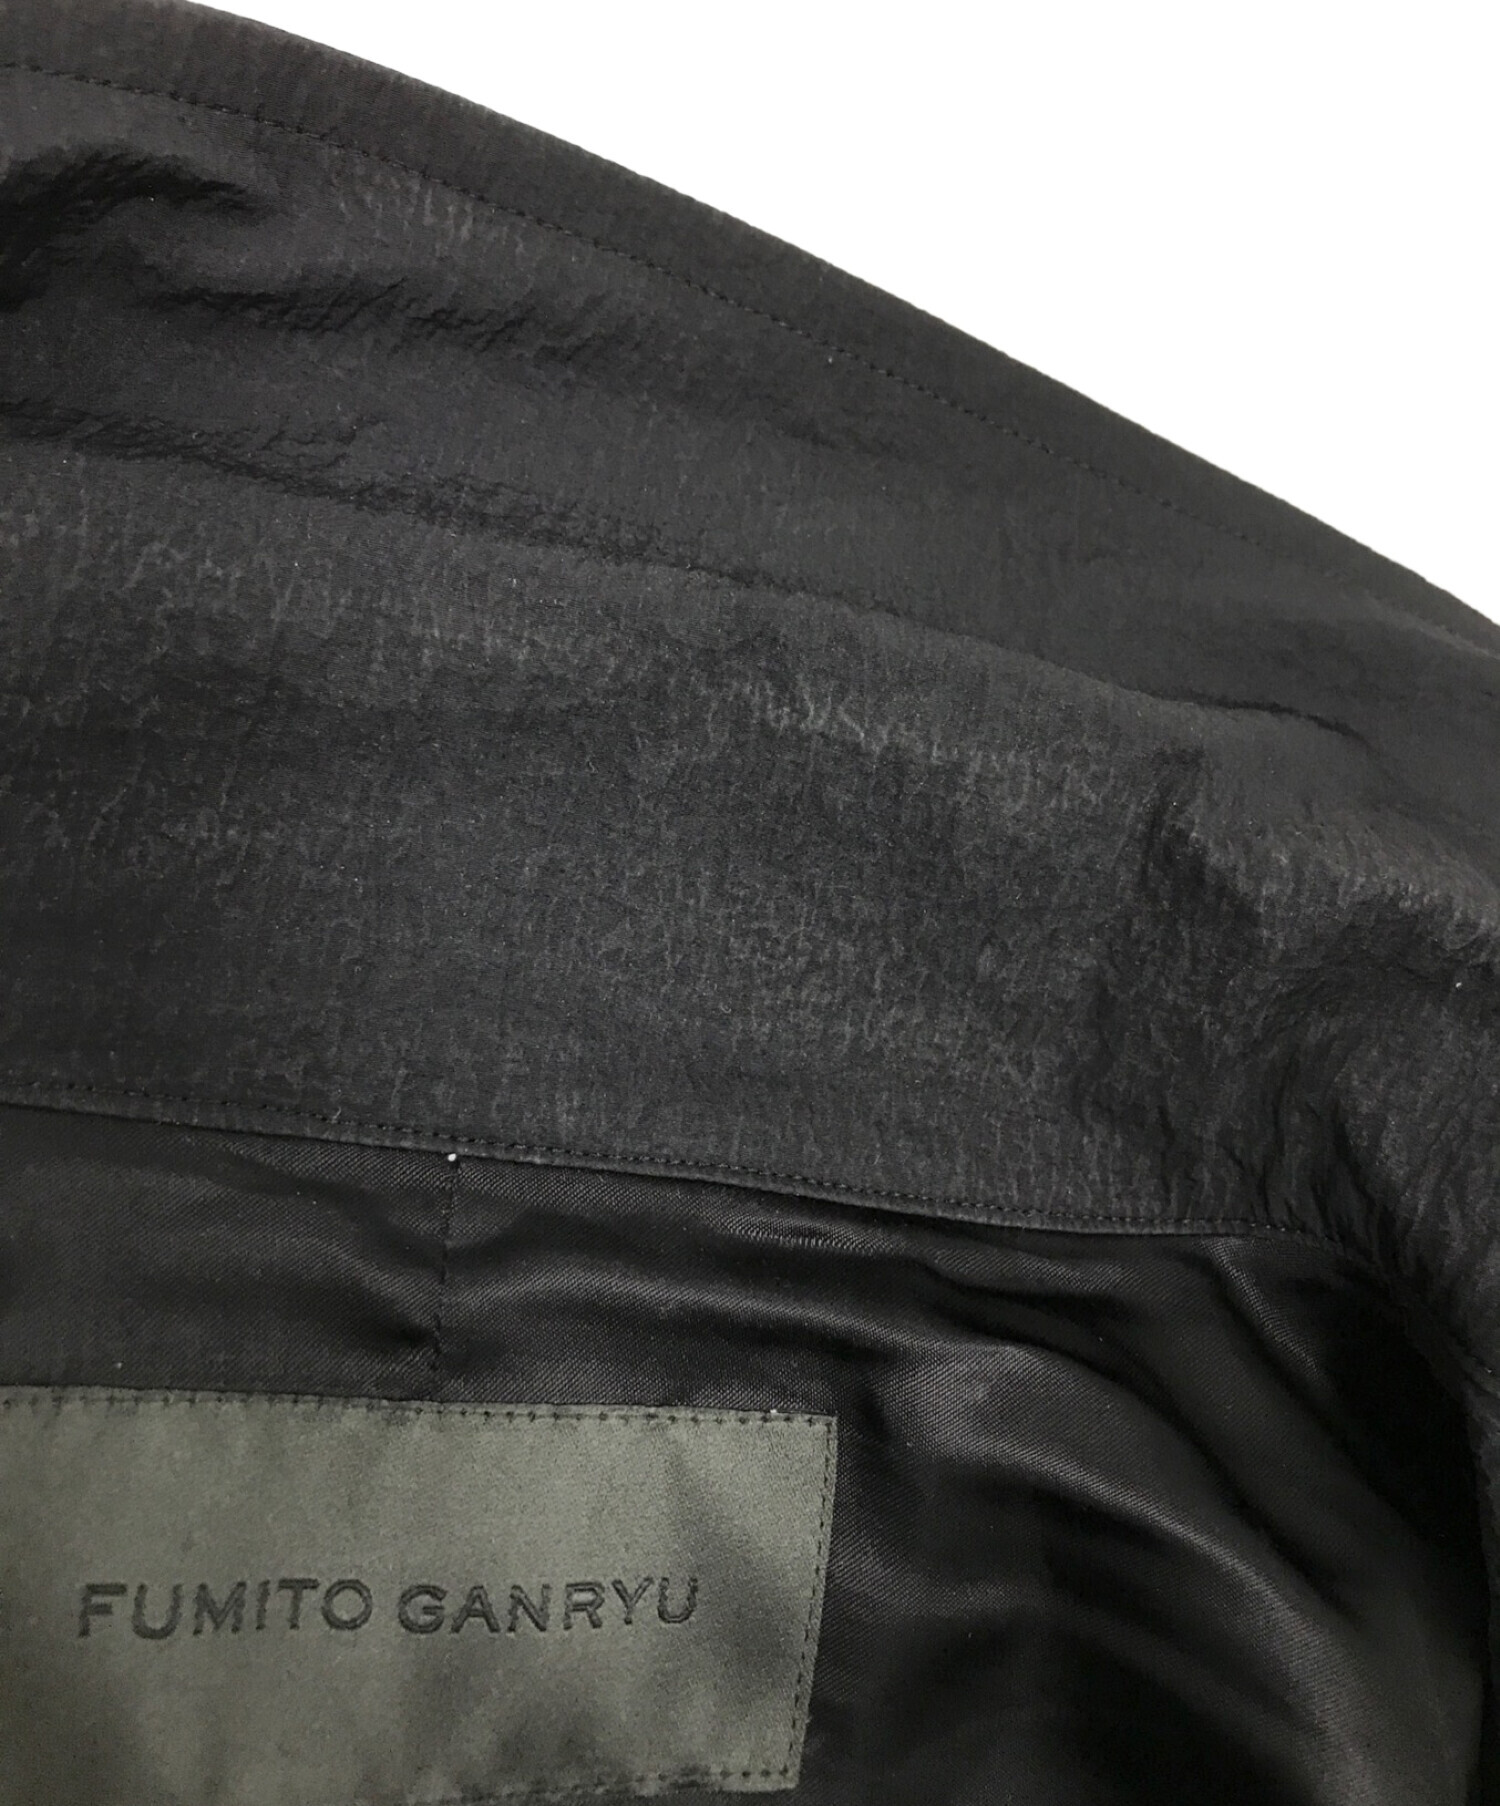 FUMITO GANRYU (フミトガンリュウ) キモノナイロンコーチジャケット ブラック サイズ:3